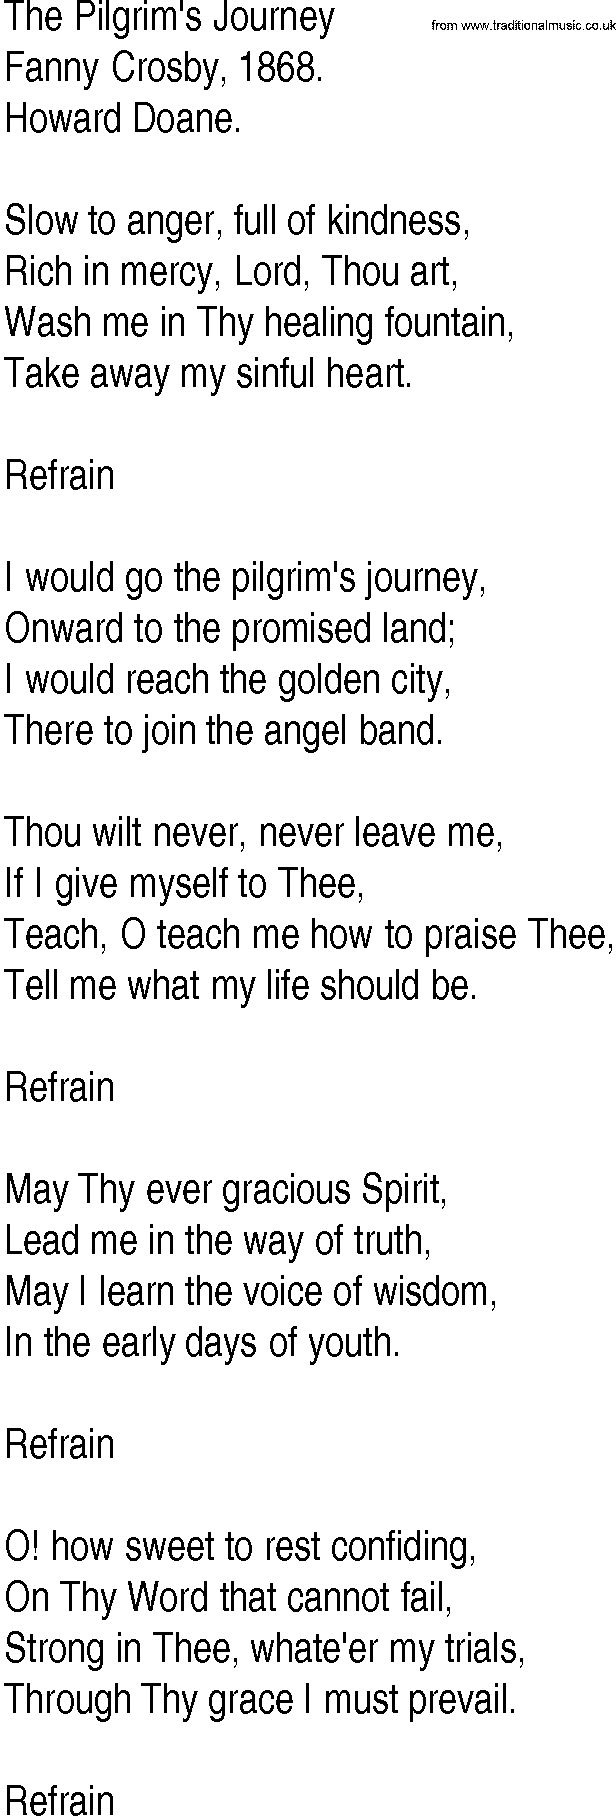 Hymn and Gospel Song: The Pilgrim's Journey by Fanny Crosby lyrics